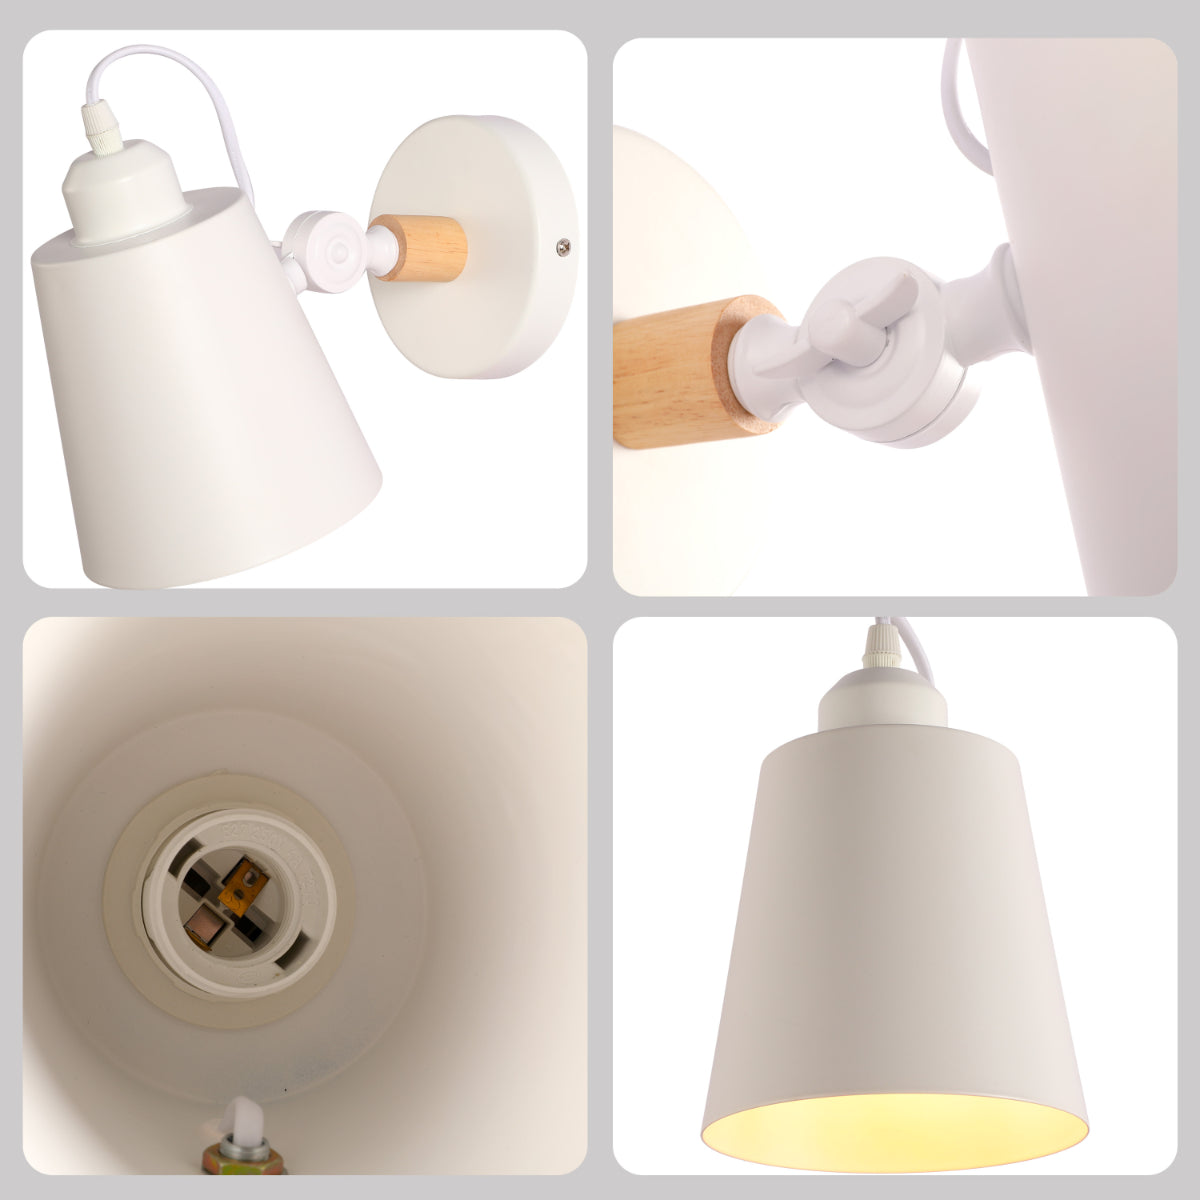 Lighting properties of Nordic Sleek Adjustable Wall Lamp - Modern Tapered Cone Design in Black or White 151-03012